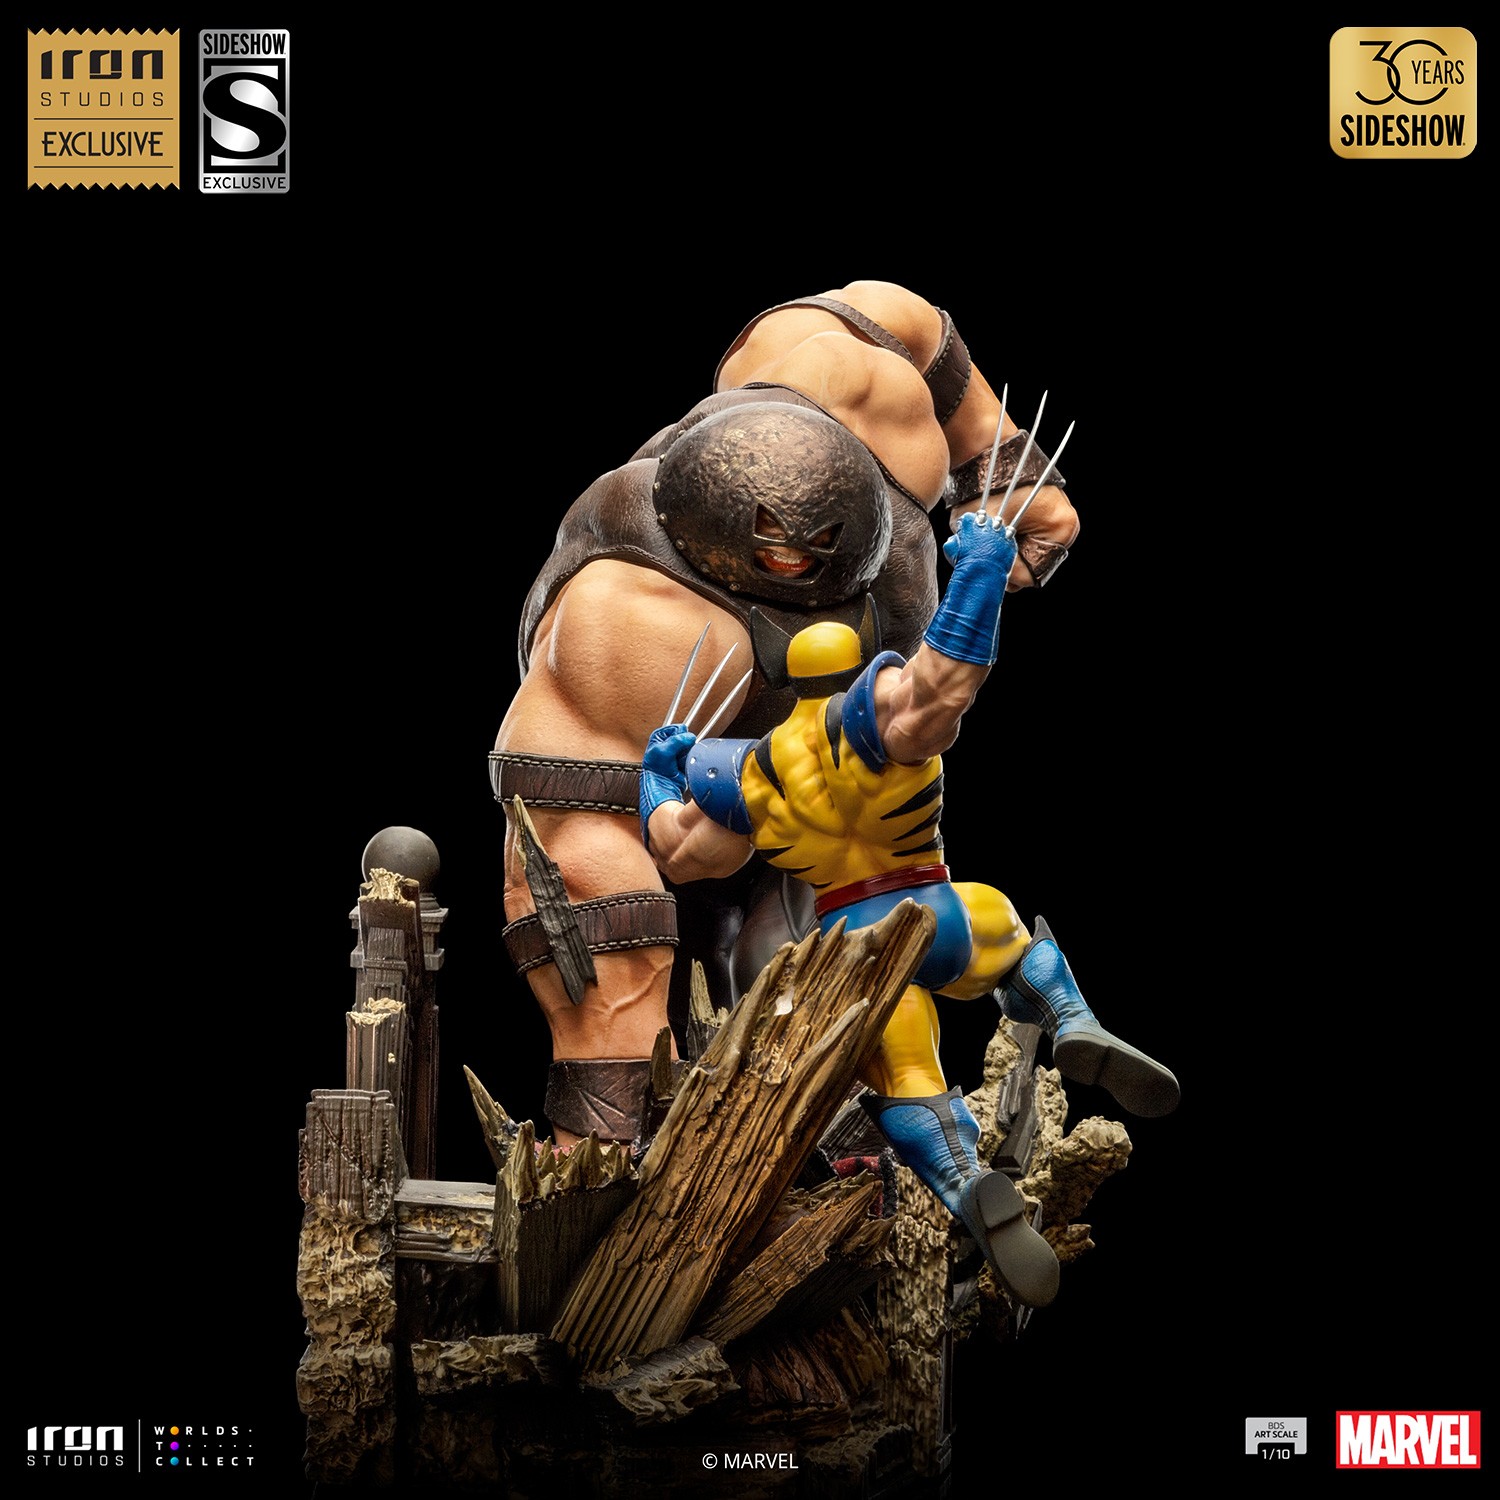 Wolverine vs Juggernaut Exclusive Edition (Prototype Shown) View 7